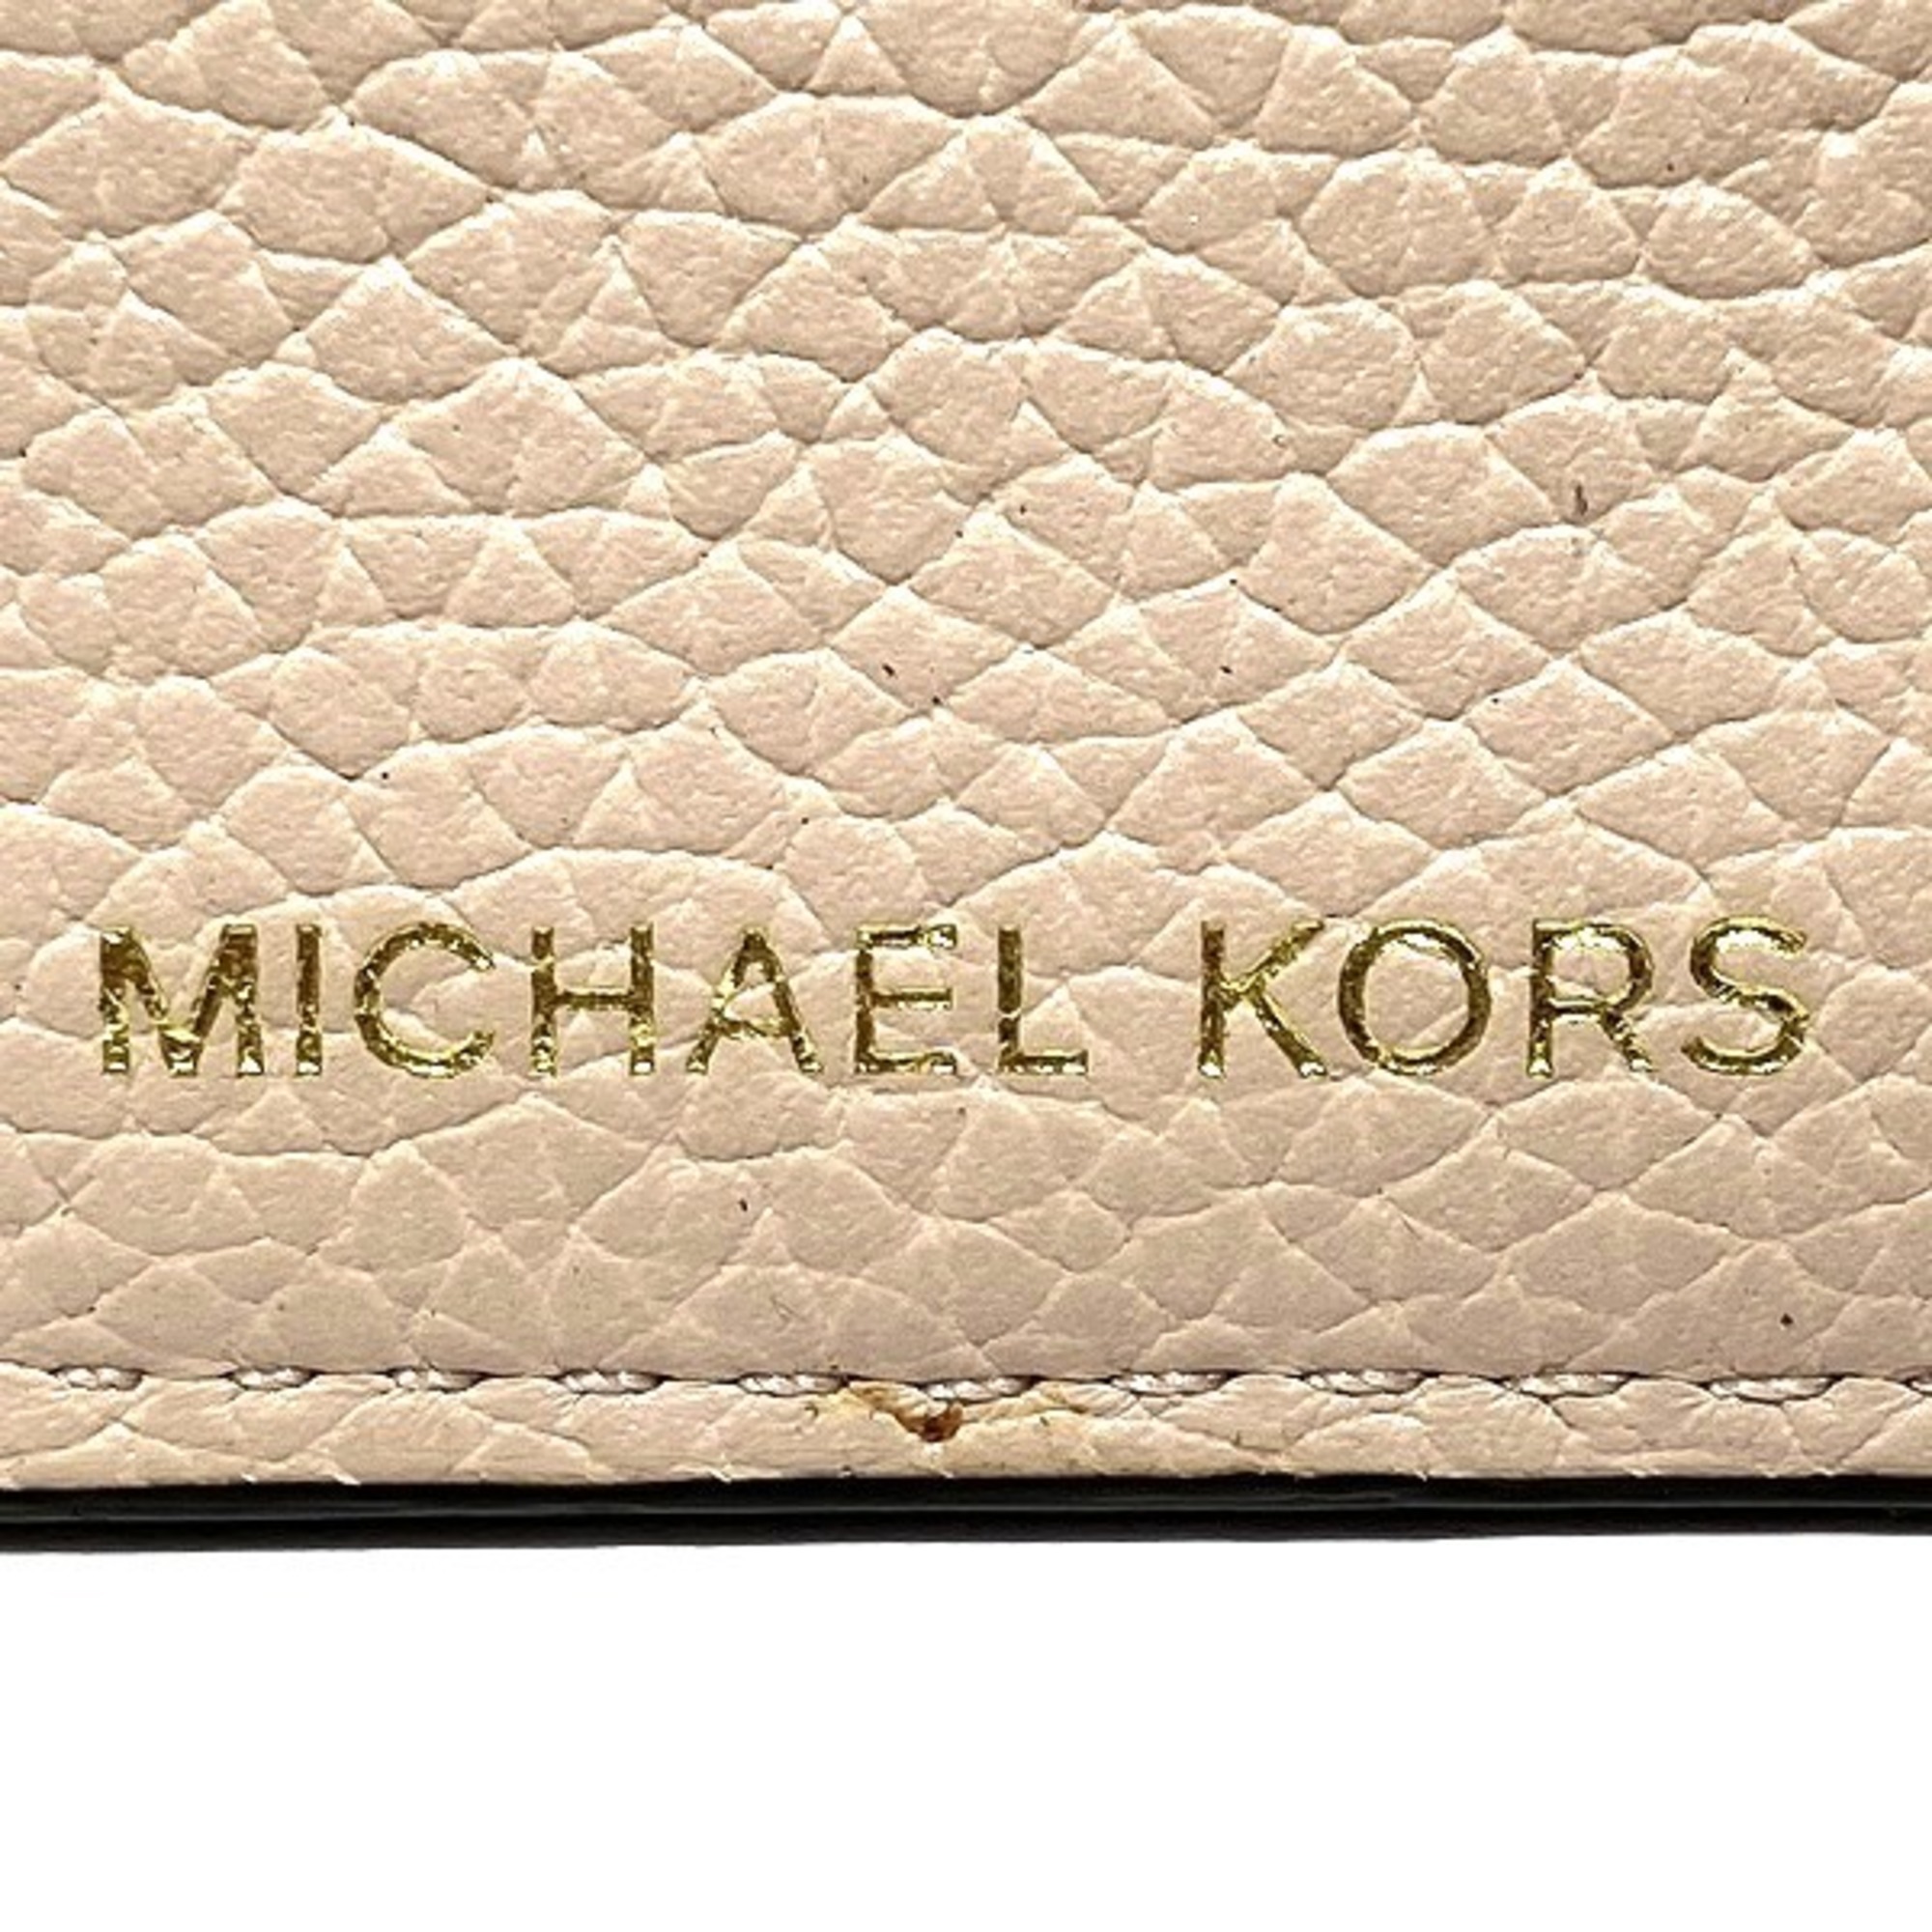 michael kors wallet shoulder bag ladies